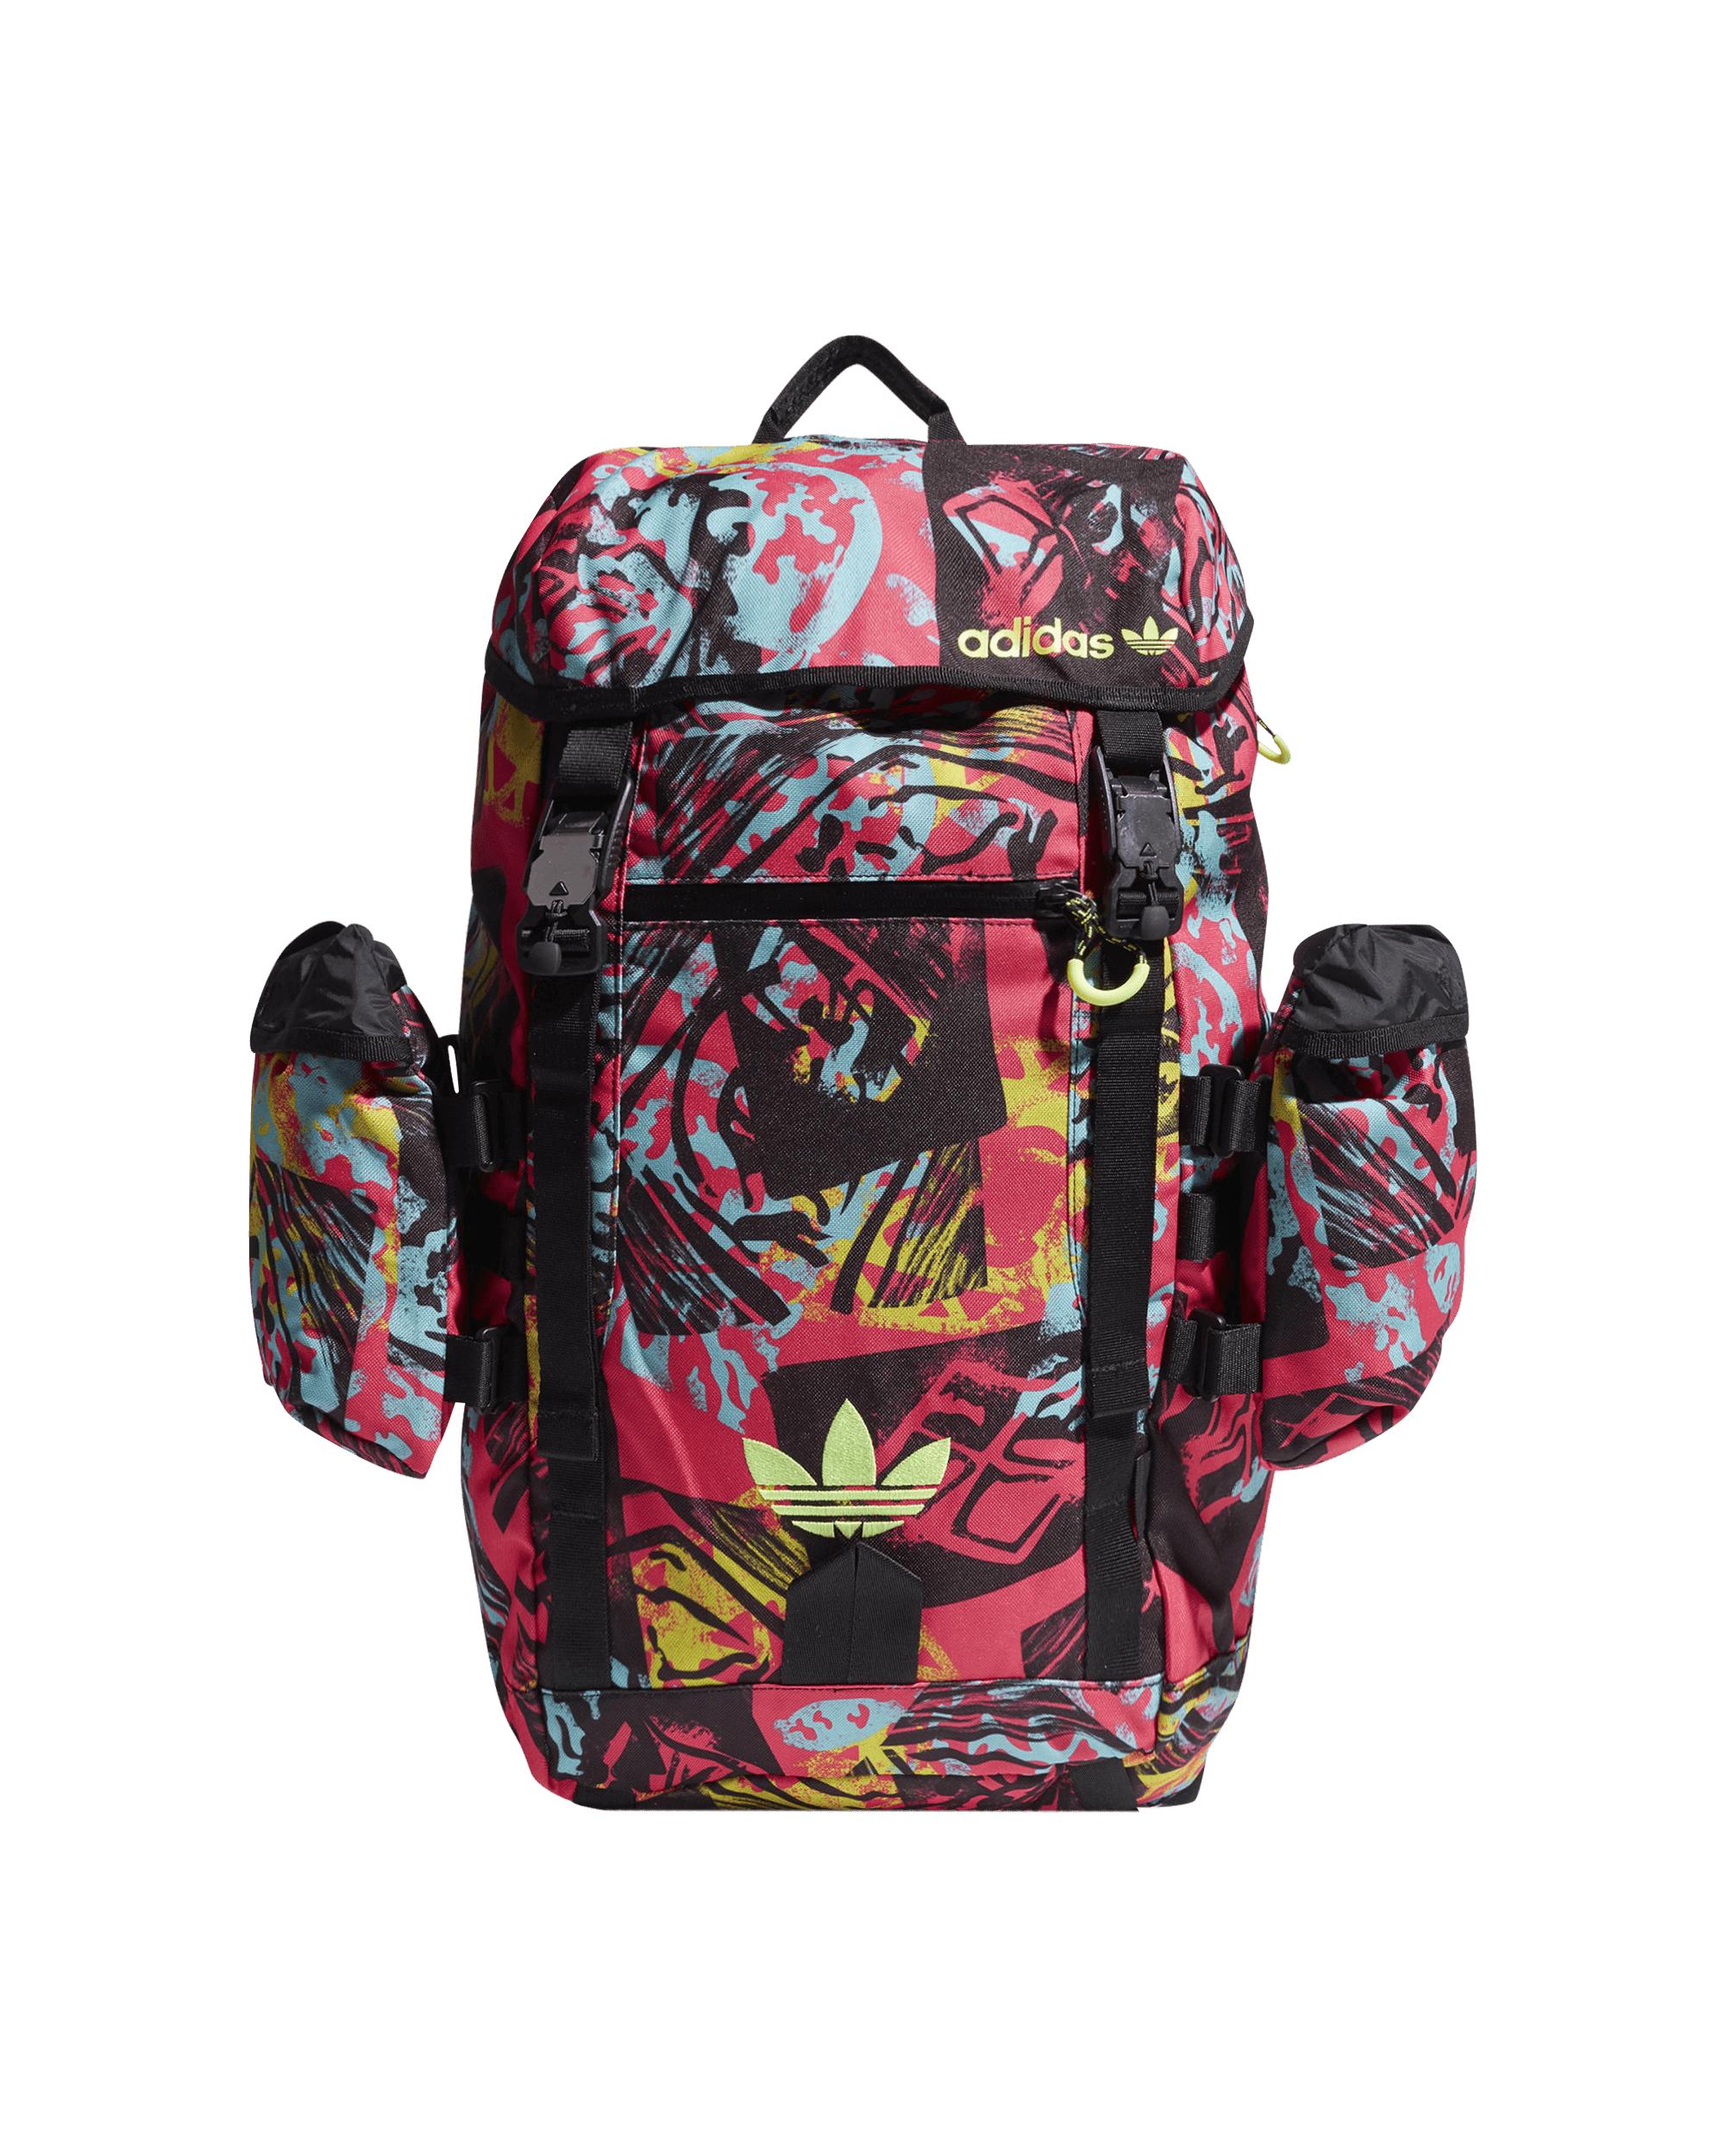 adidas Originals Adventure Toploader Cordura Backpack Multicolor/black U  for Men - Lyst